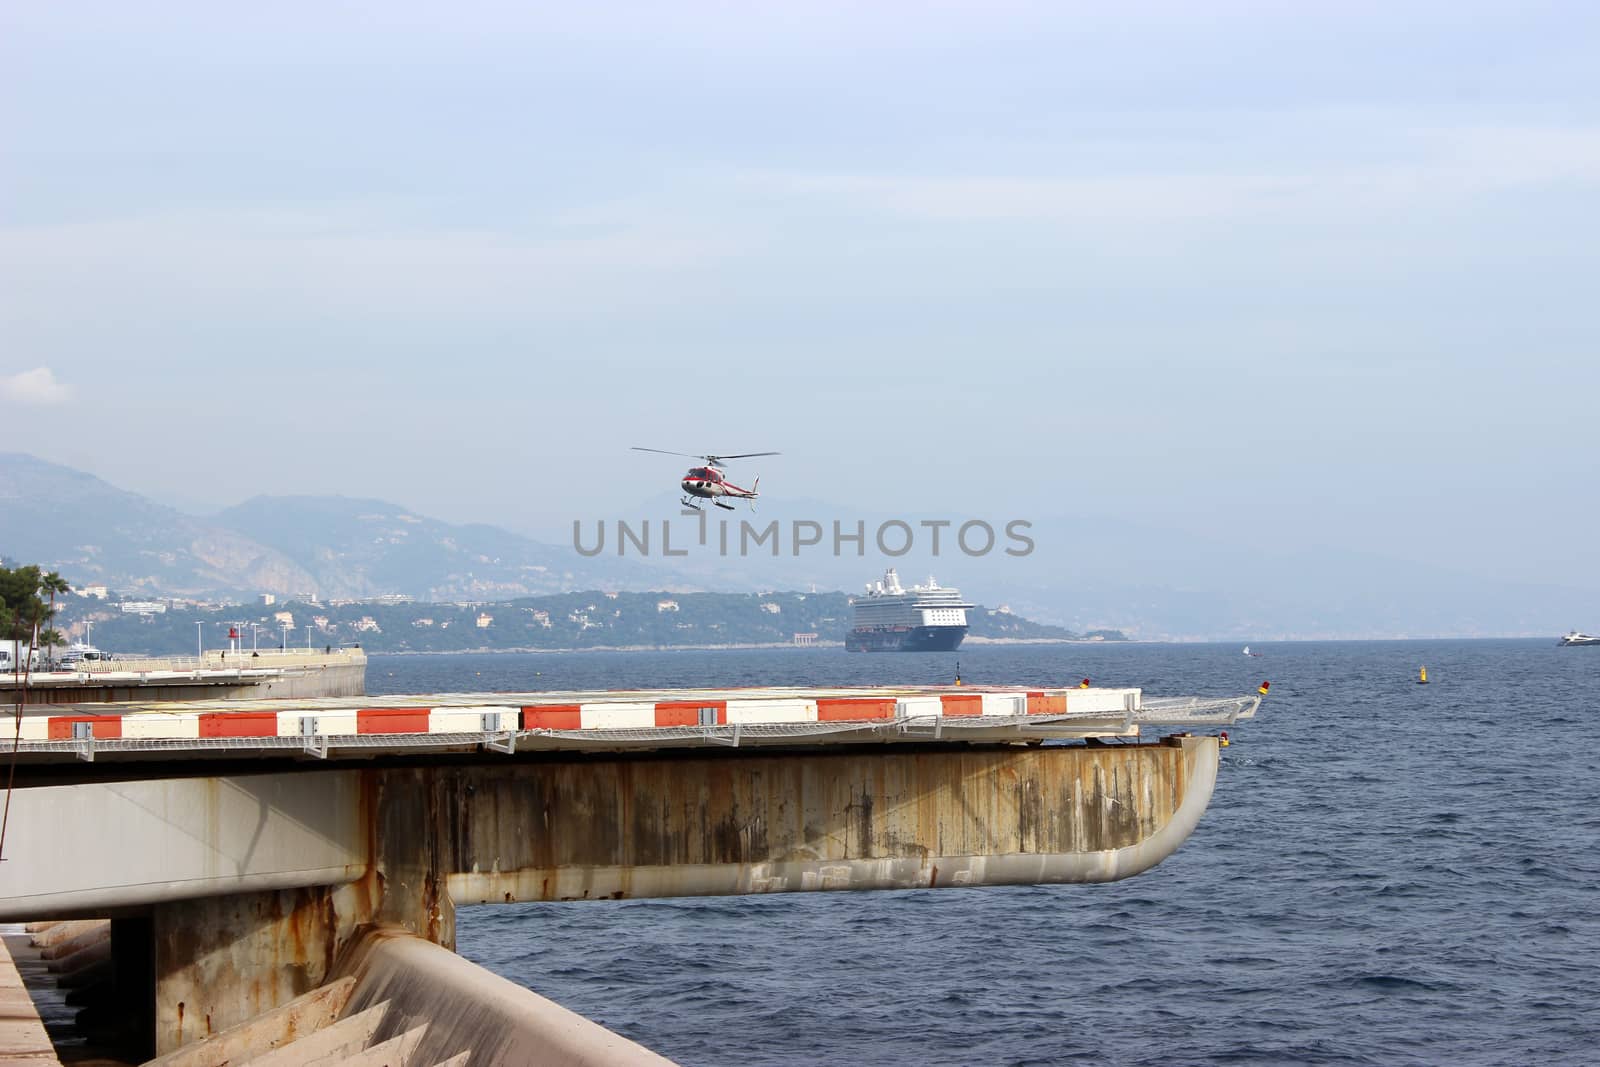 Monaco Heliport by bensib